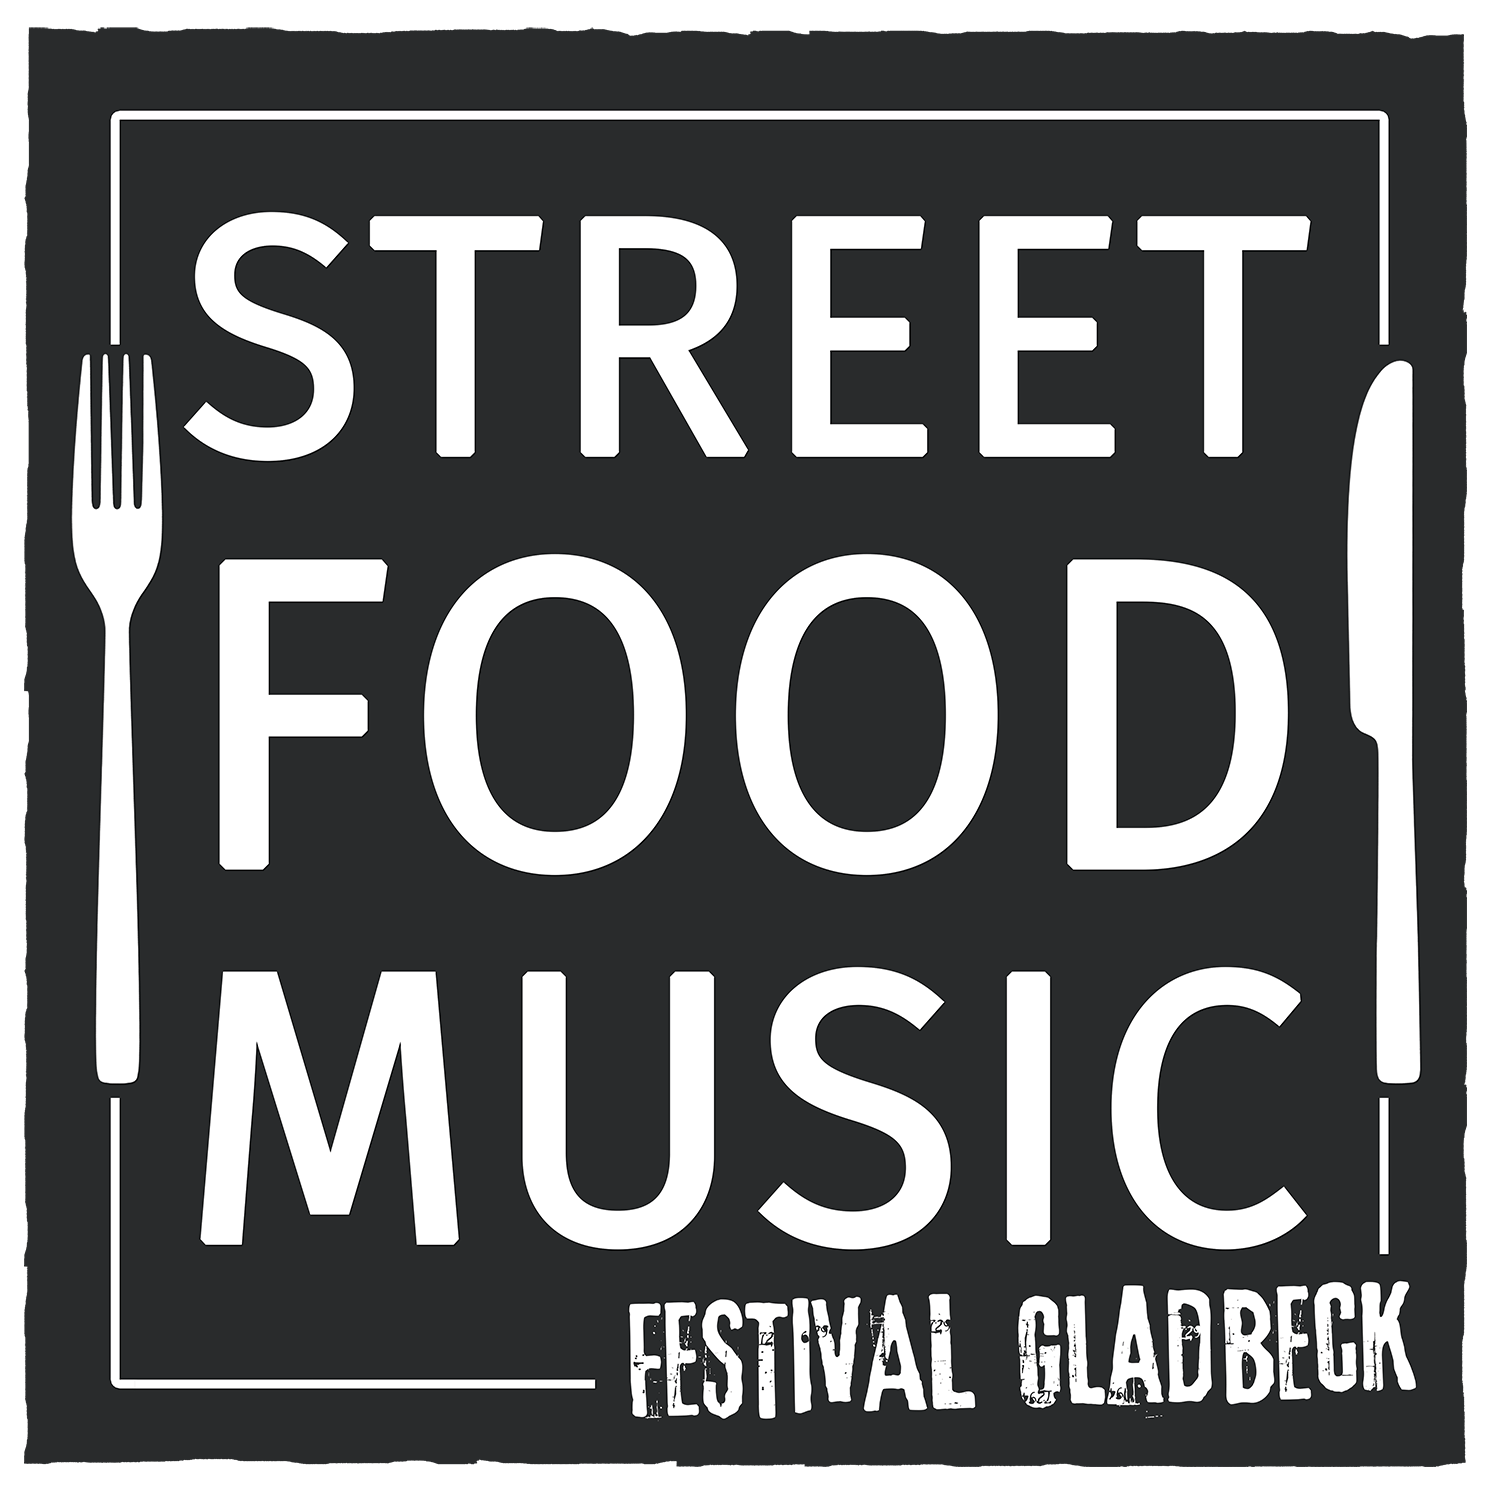 Street Food & Music Festival Gladbeck